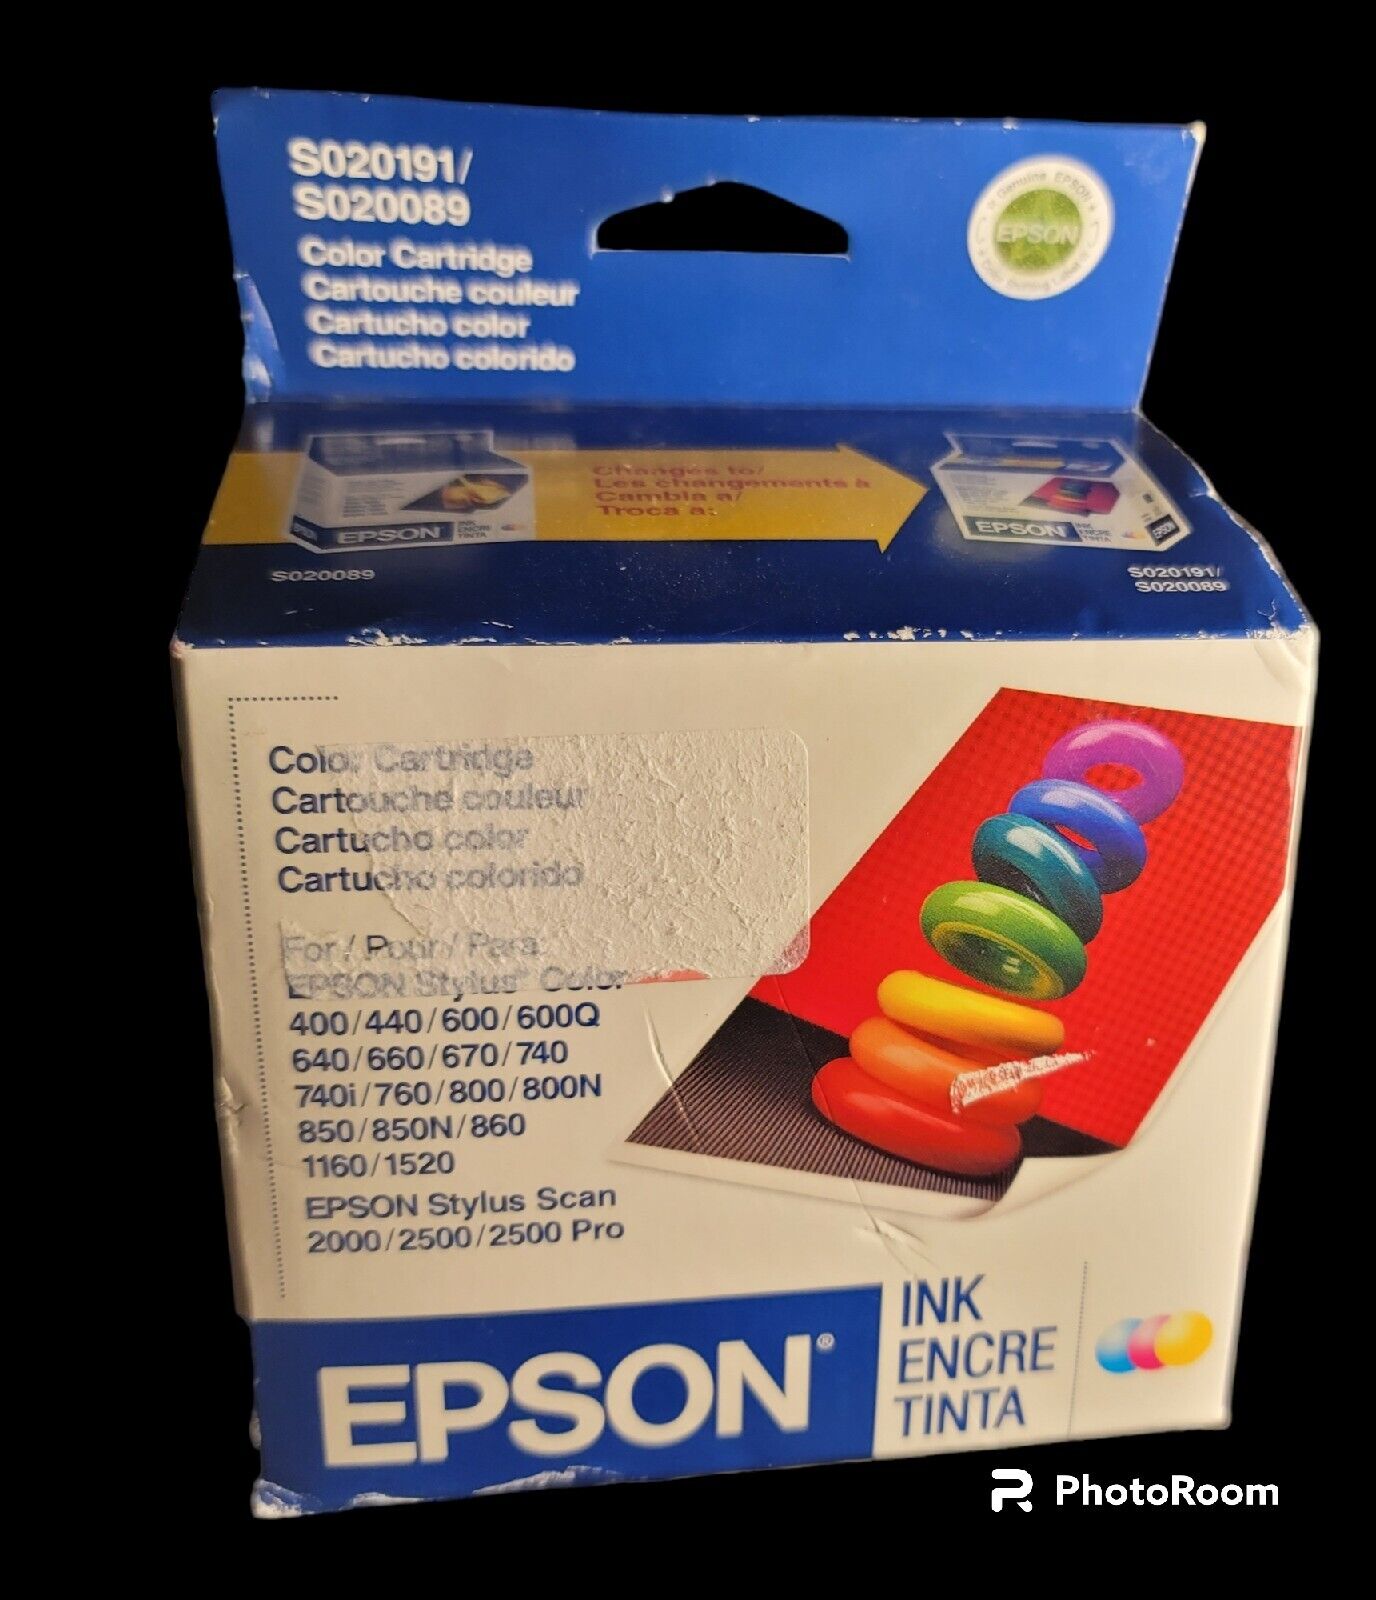 Epson Color Ink Cartridge S020191/S020089 Genuine OEM Sealed **EXPIRED 04/2008**